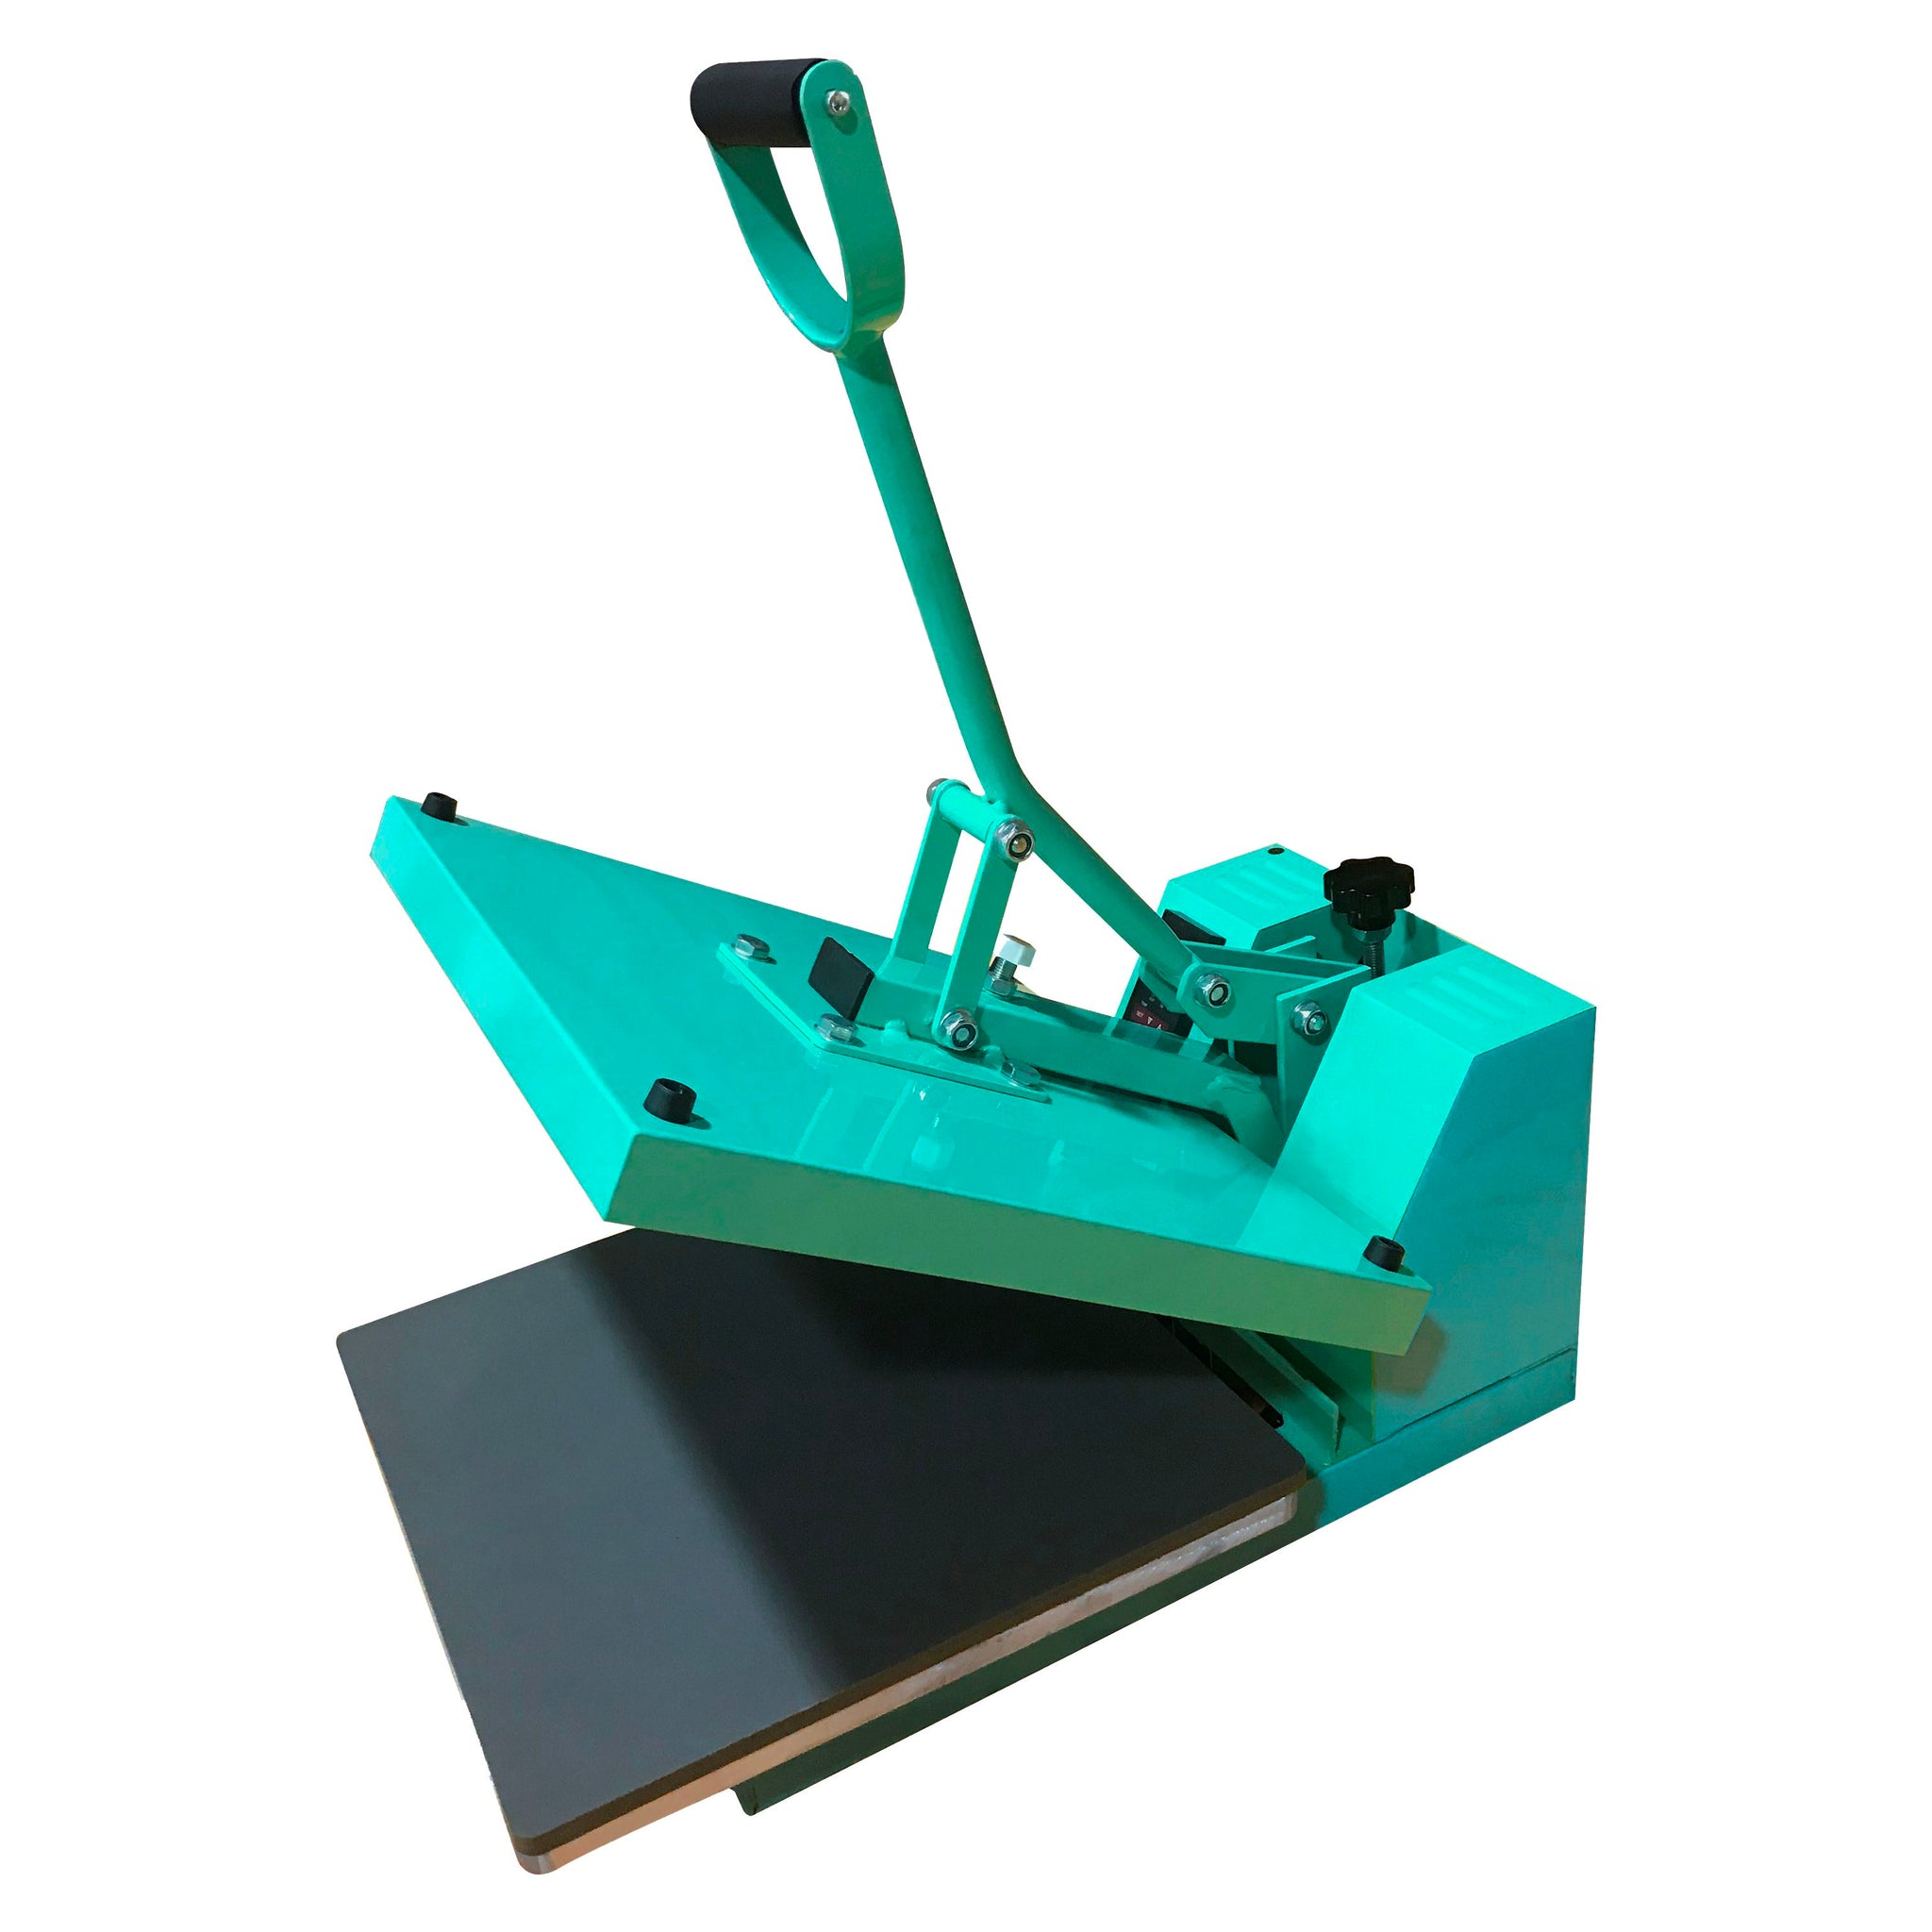 Cricut Easy Press CHP1800 9x9 Heat Press Machine Turquoise W